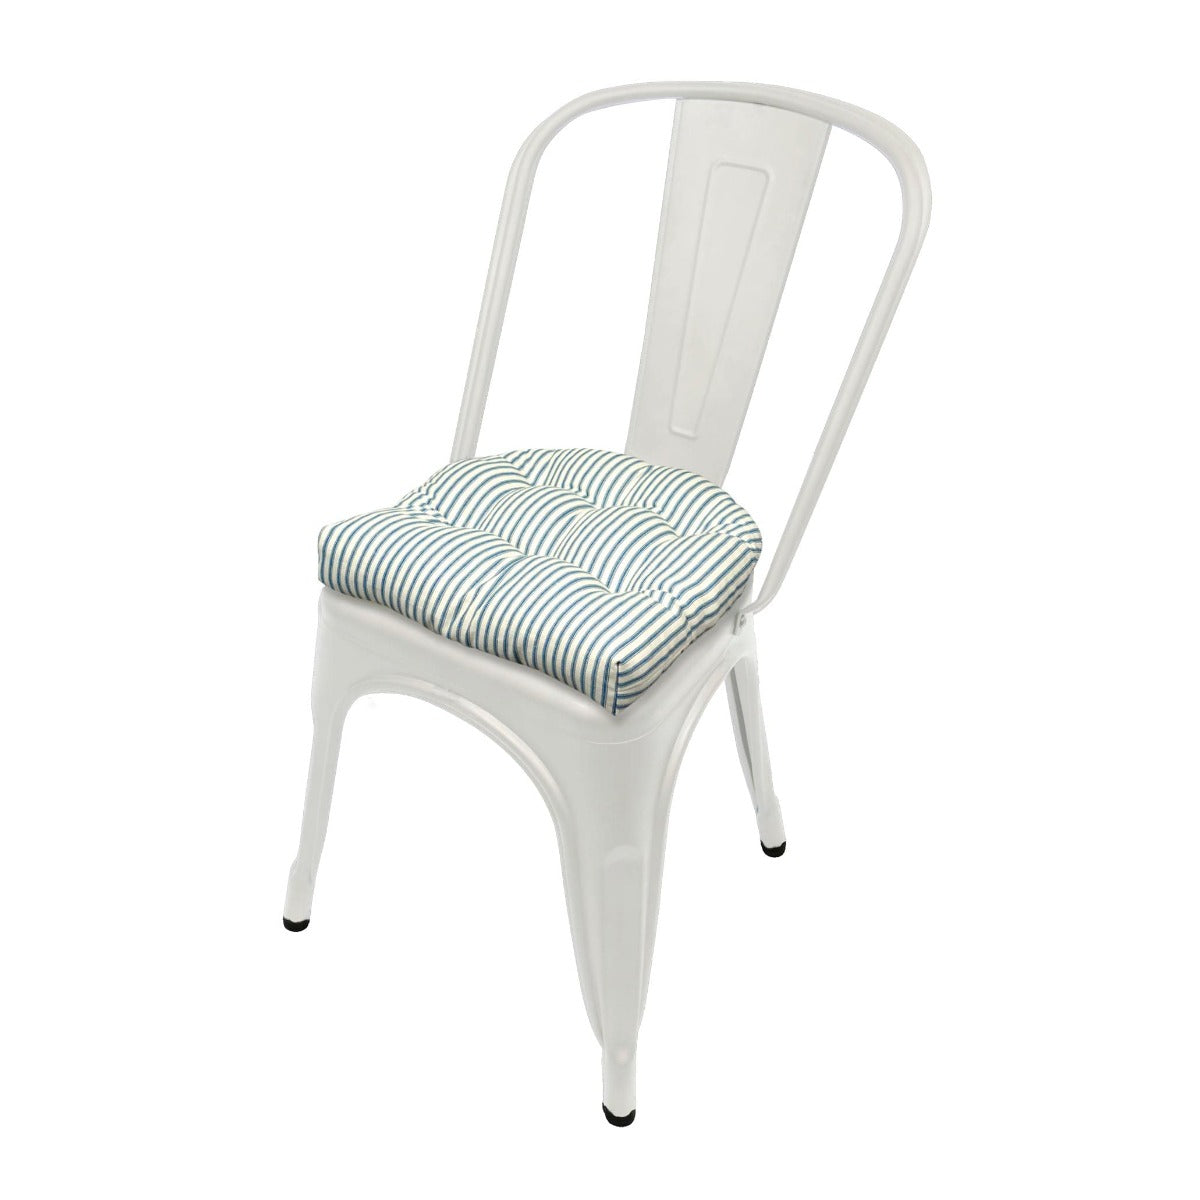 Ticking Stripe Navy Blue Industrial Chair Cushion - Latex Foam Fill - Barnett Home Decor 